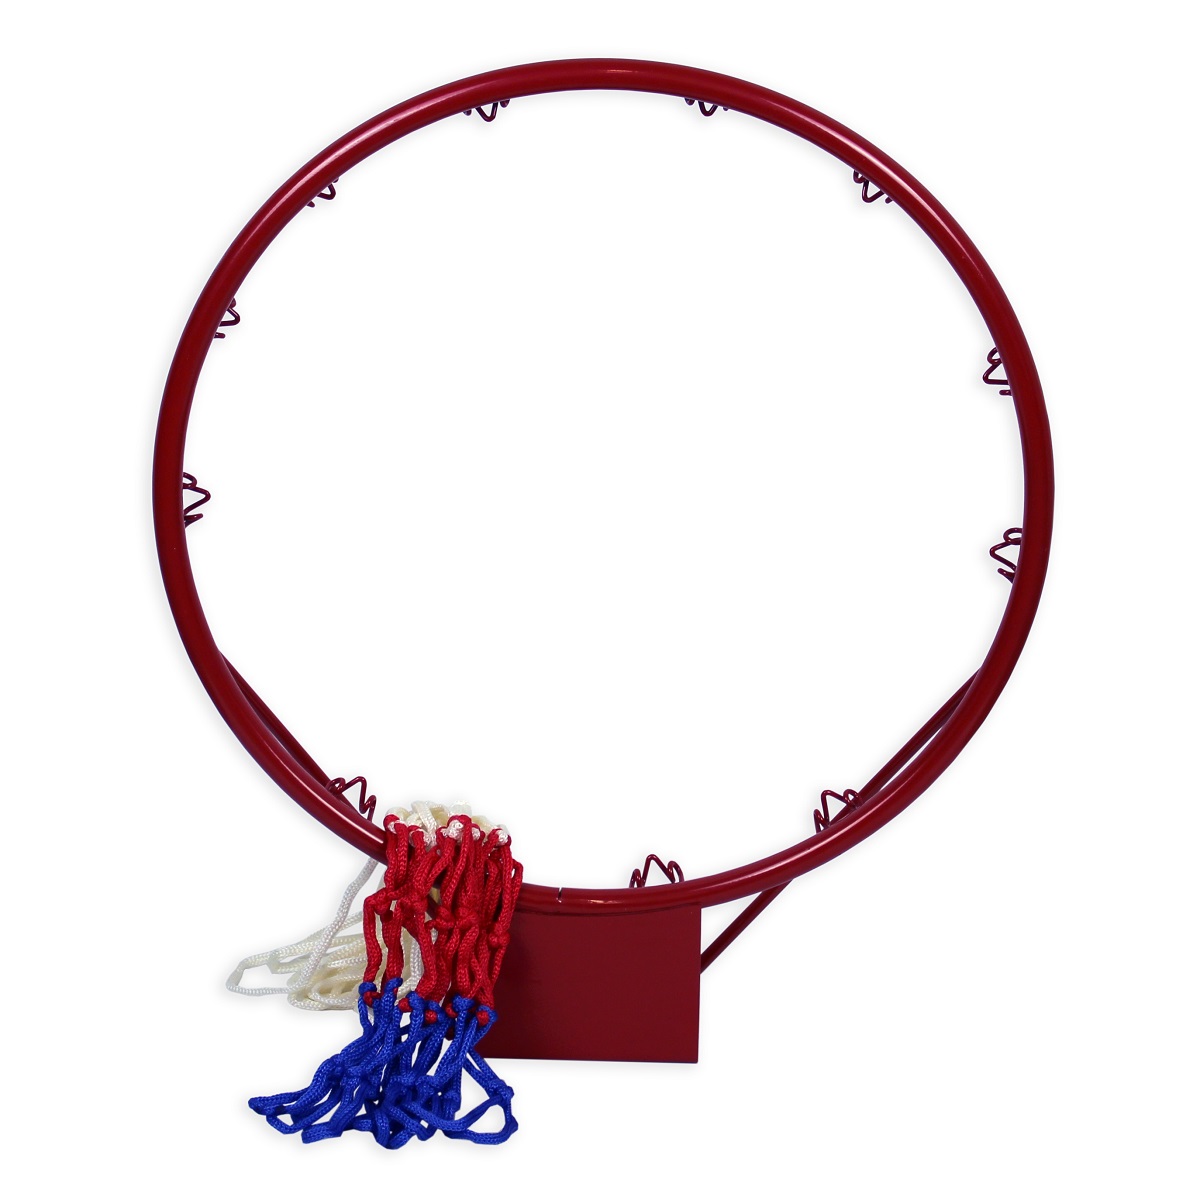  Basketbalová obrúčka MASTER 16 mm + sieťka 